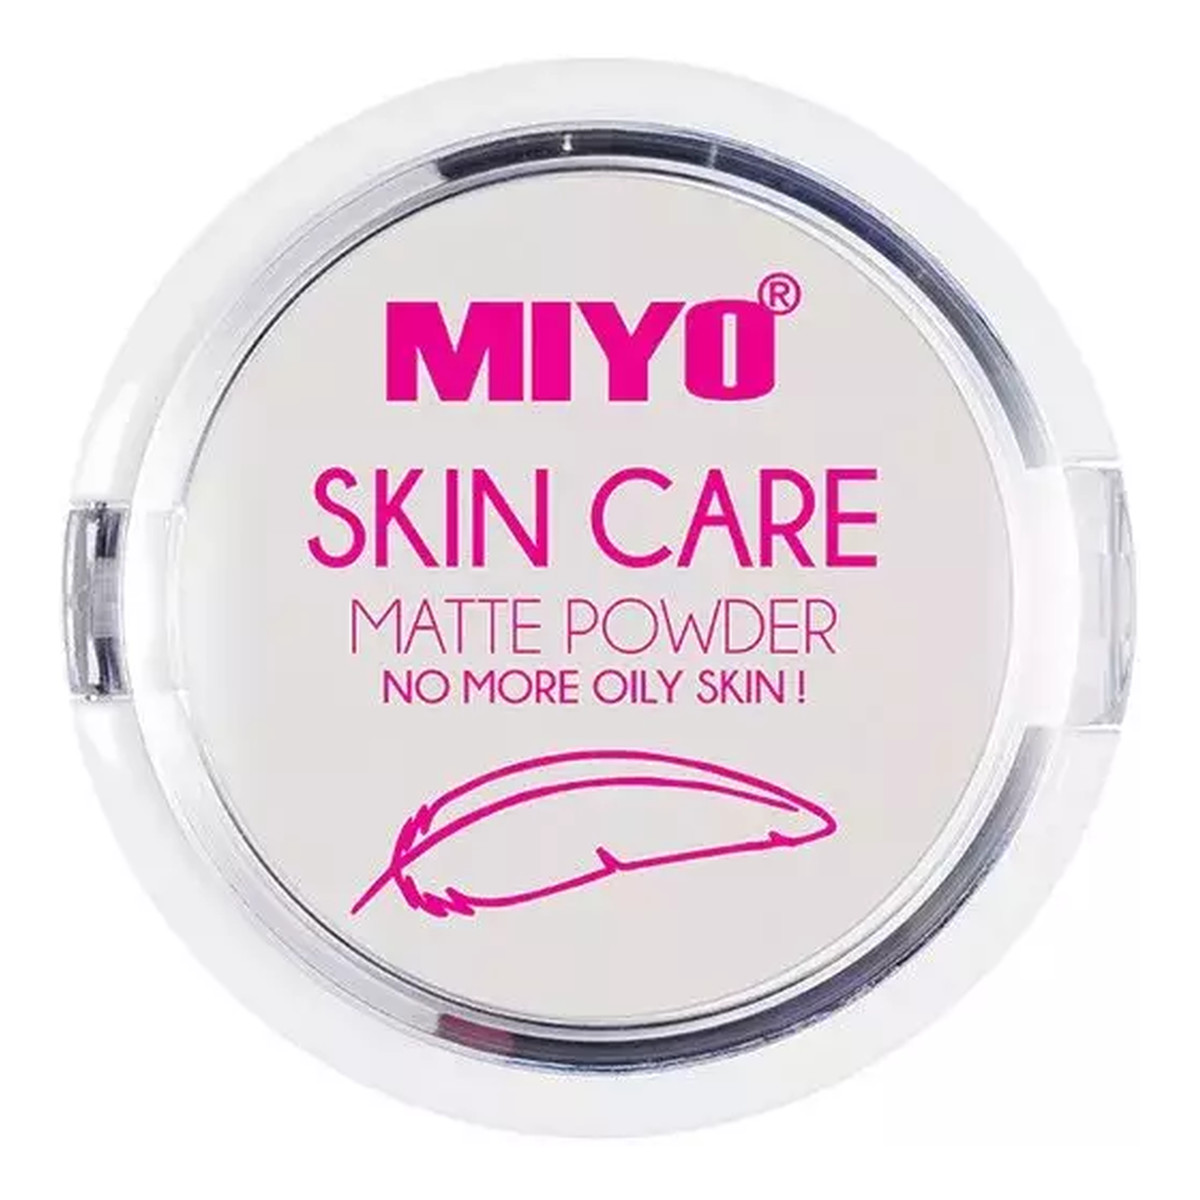 MIYO Puder Ryżowy Skin Care compact powder 9g